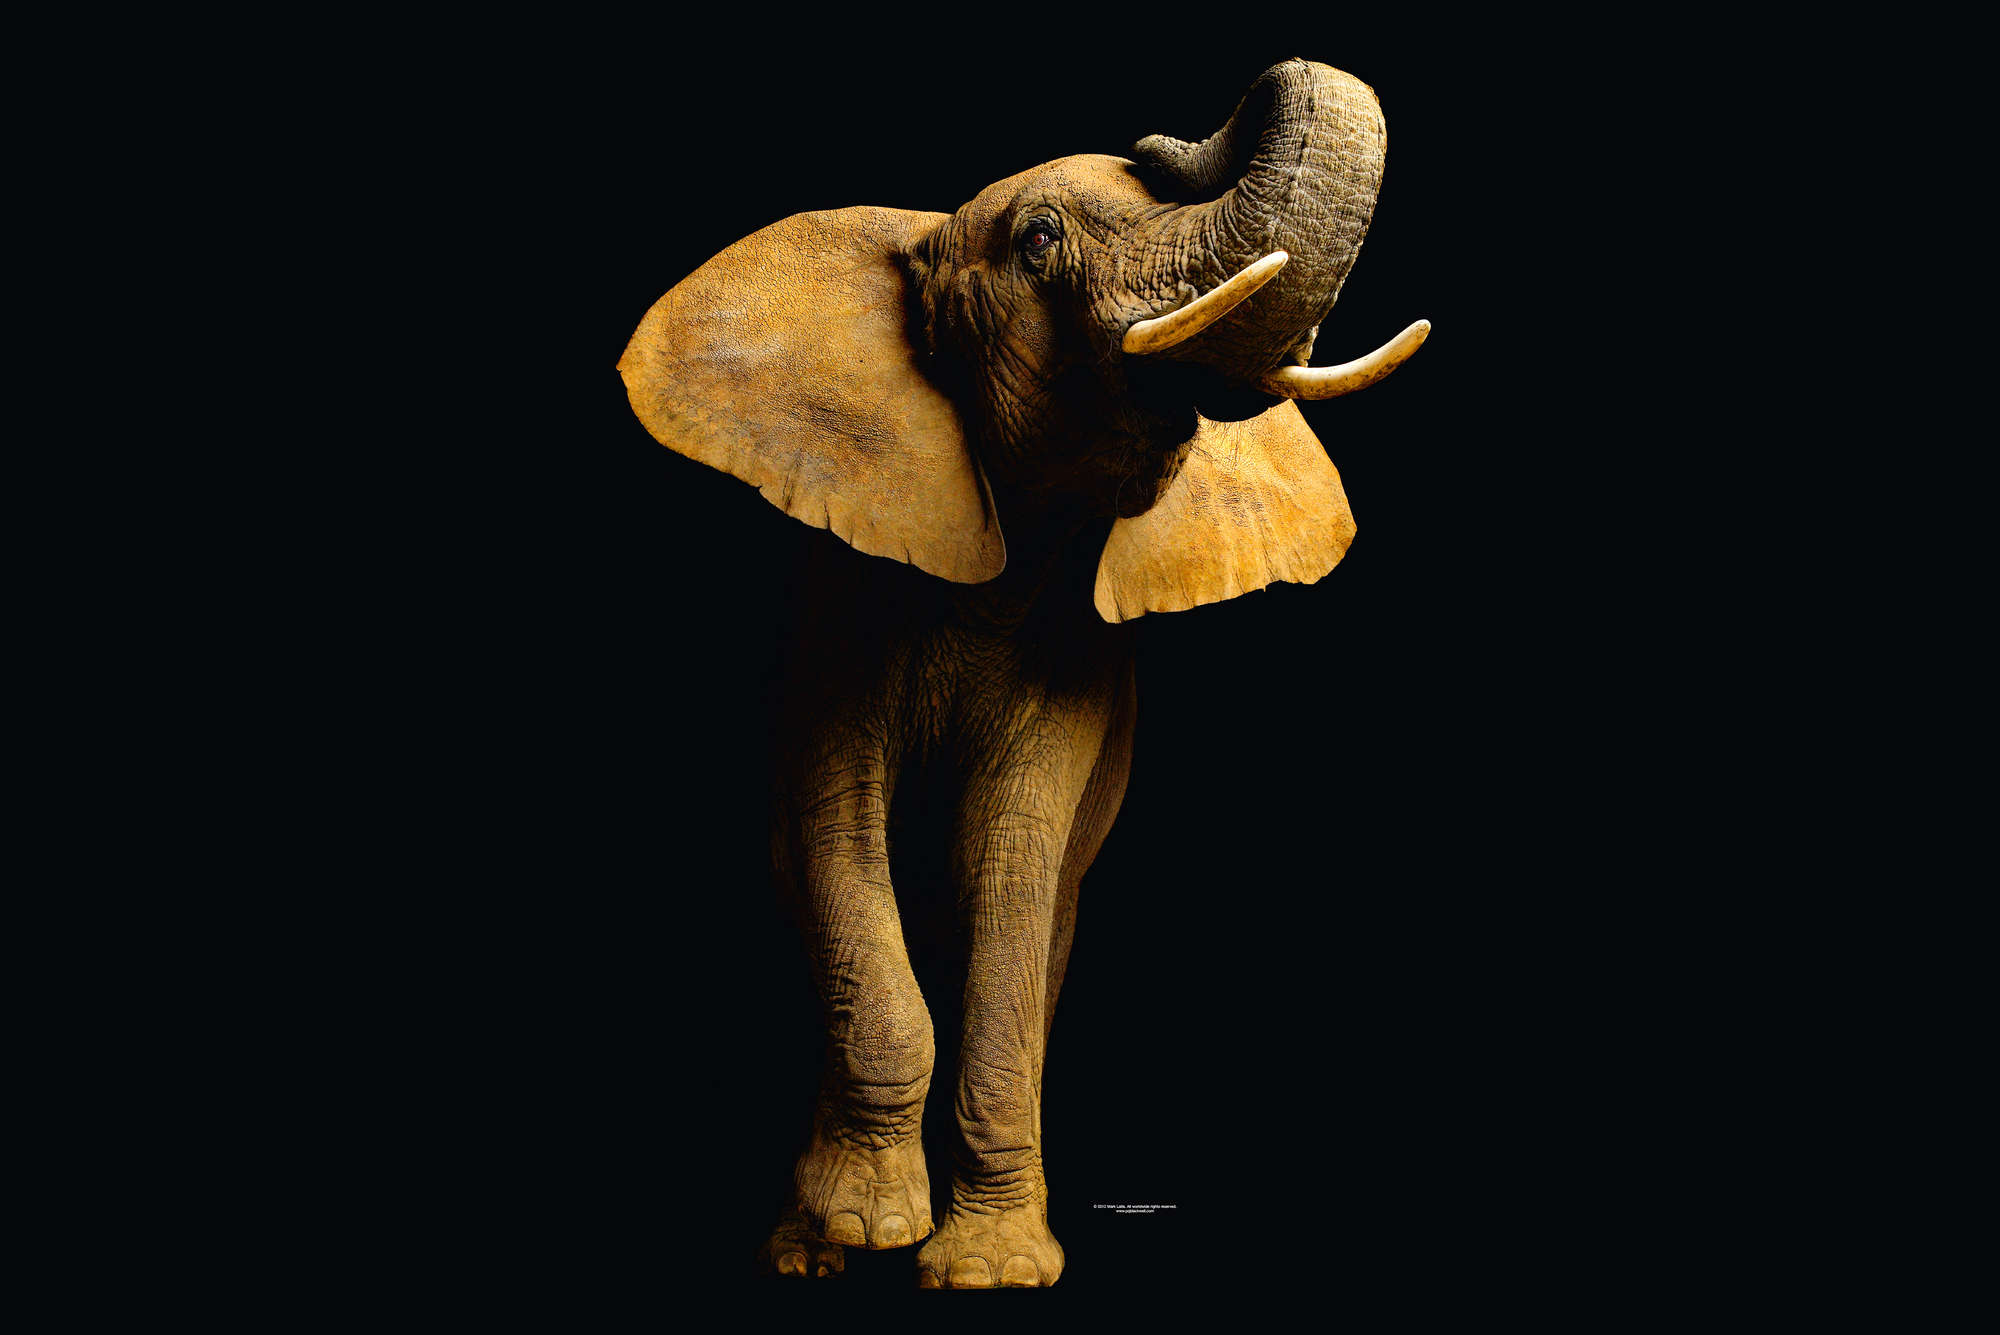             Elephant - animal portrait mural
        